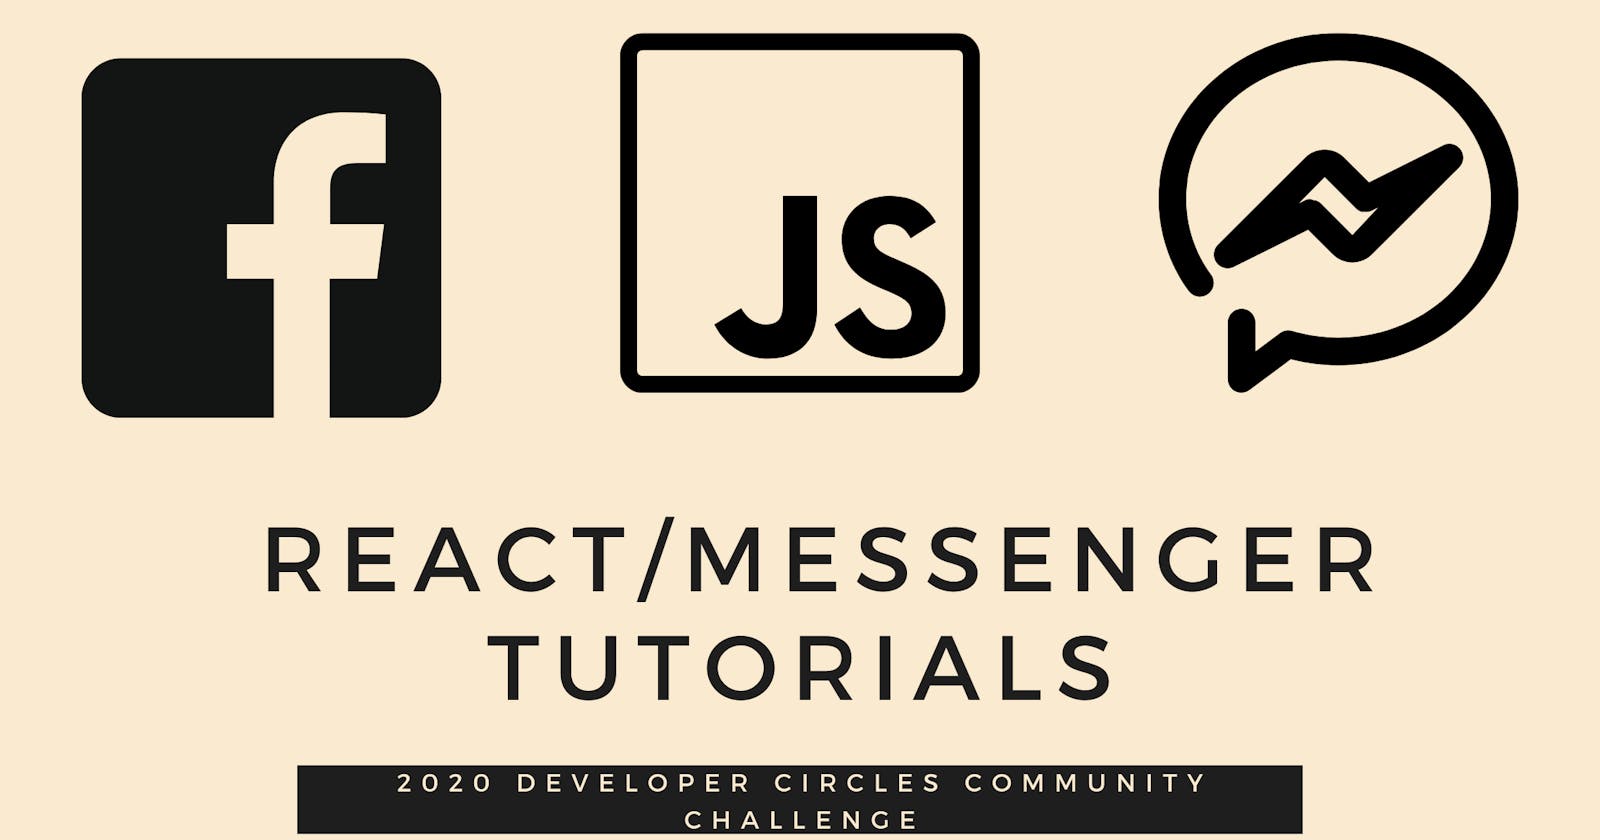 Beginner React/Messenger Tutorials: 2020 Developer Circles Community Challenge